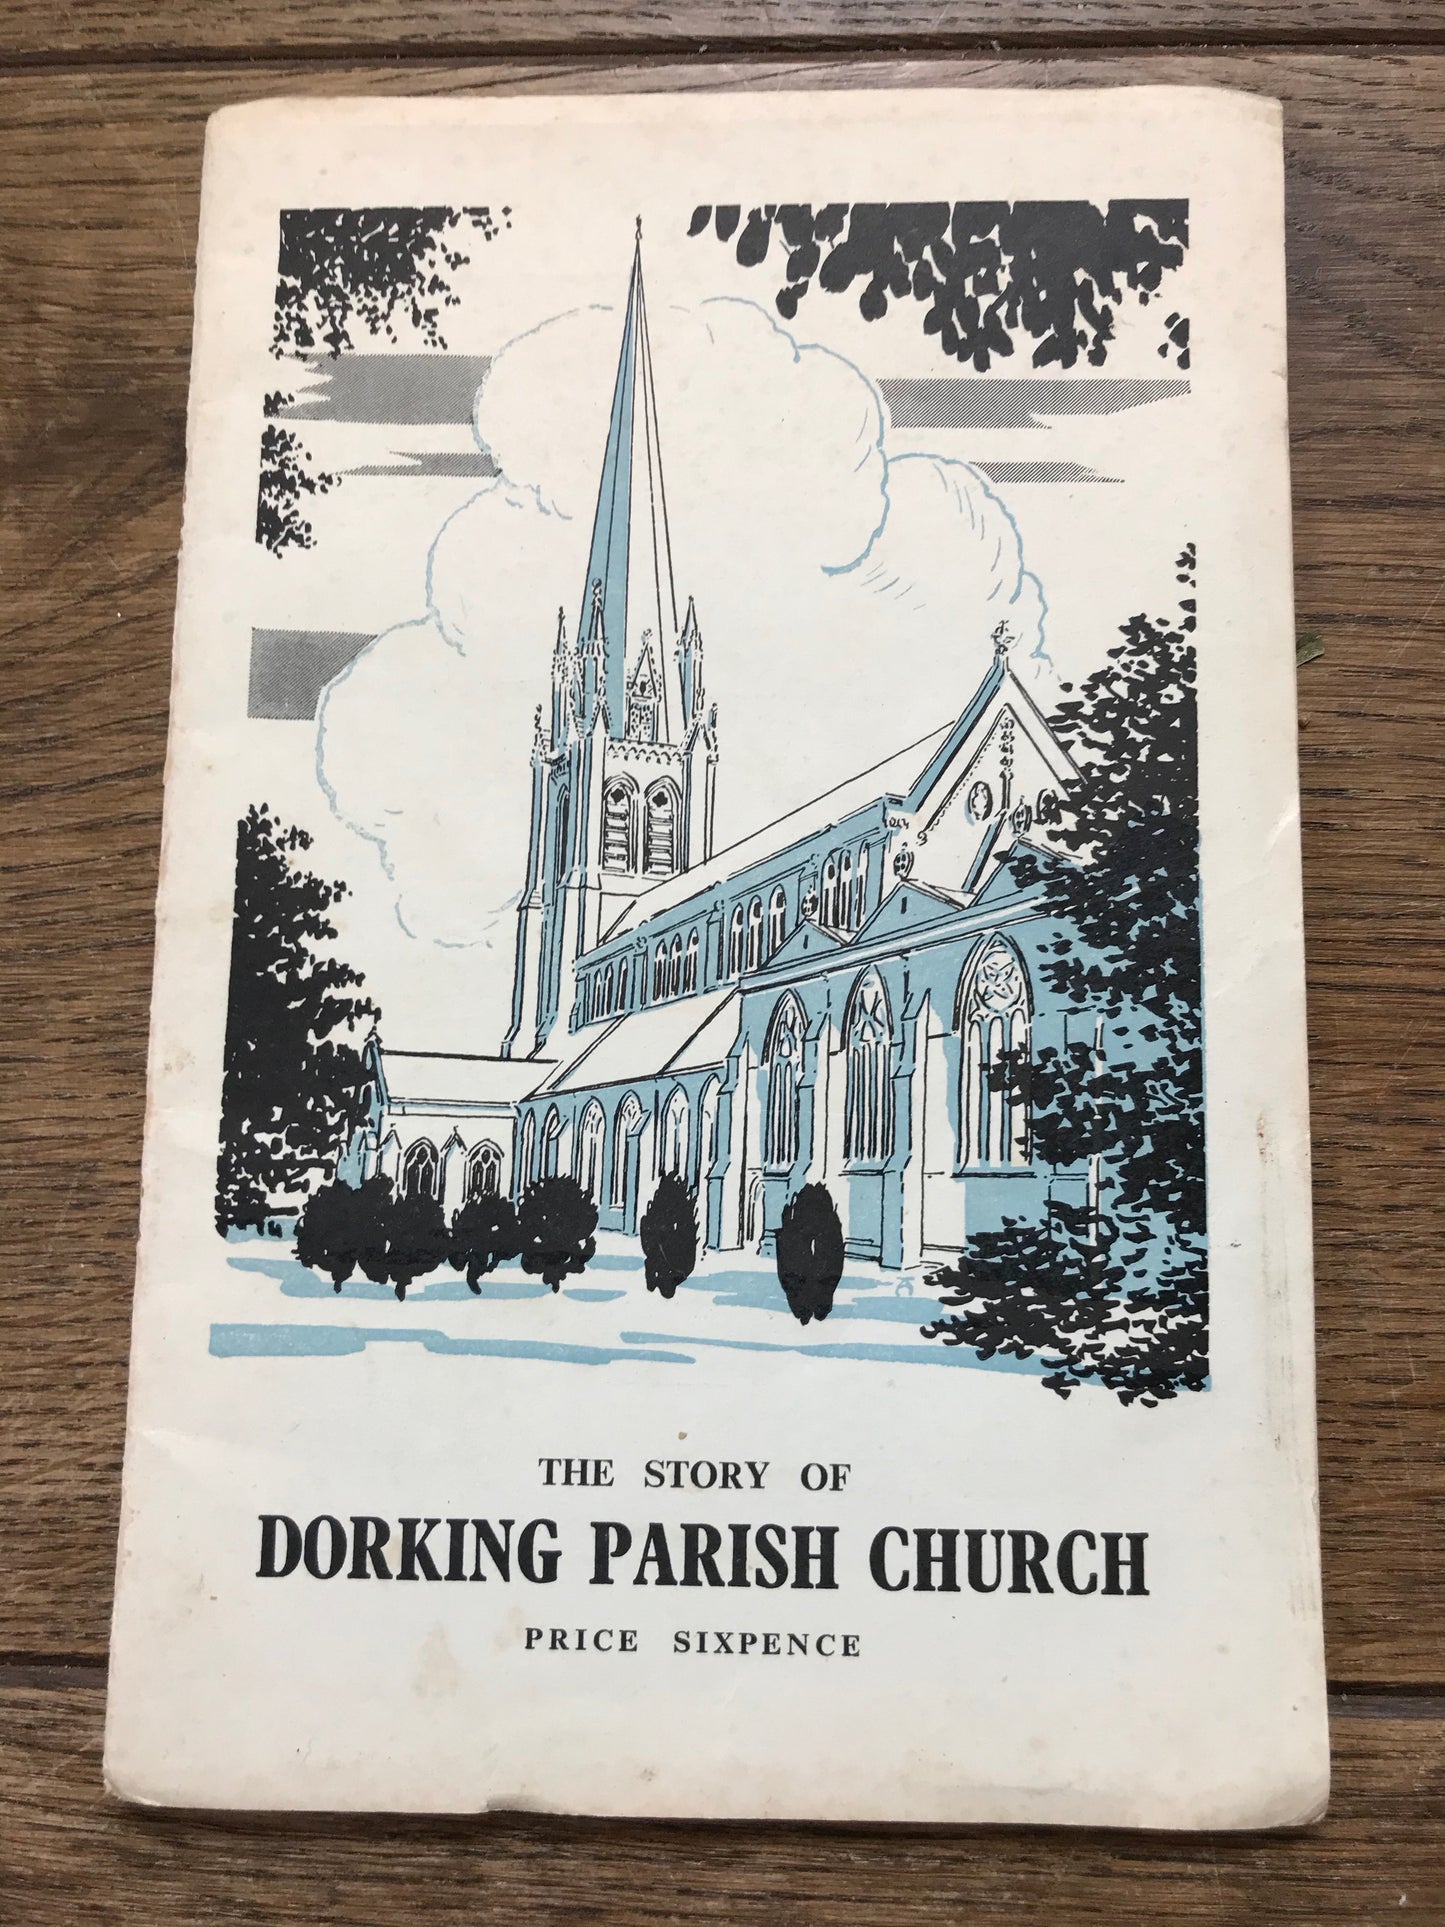 The Story of Dorking Parish Church